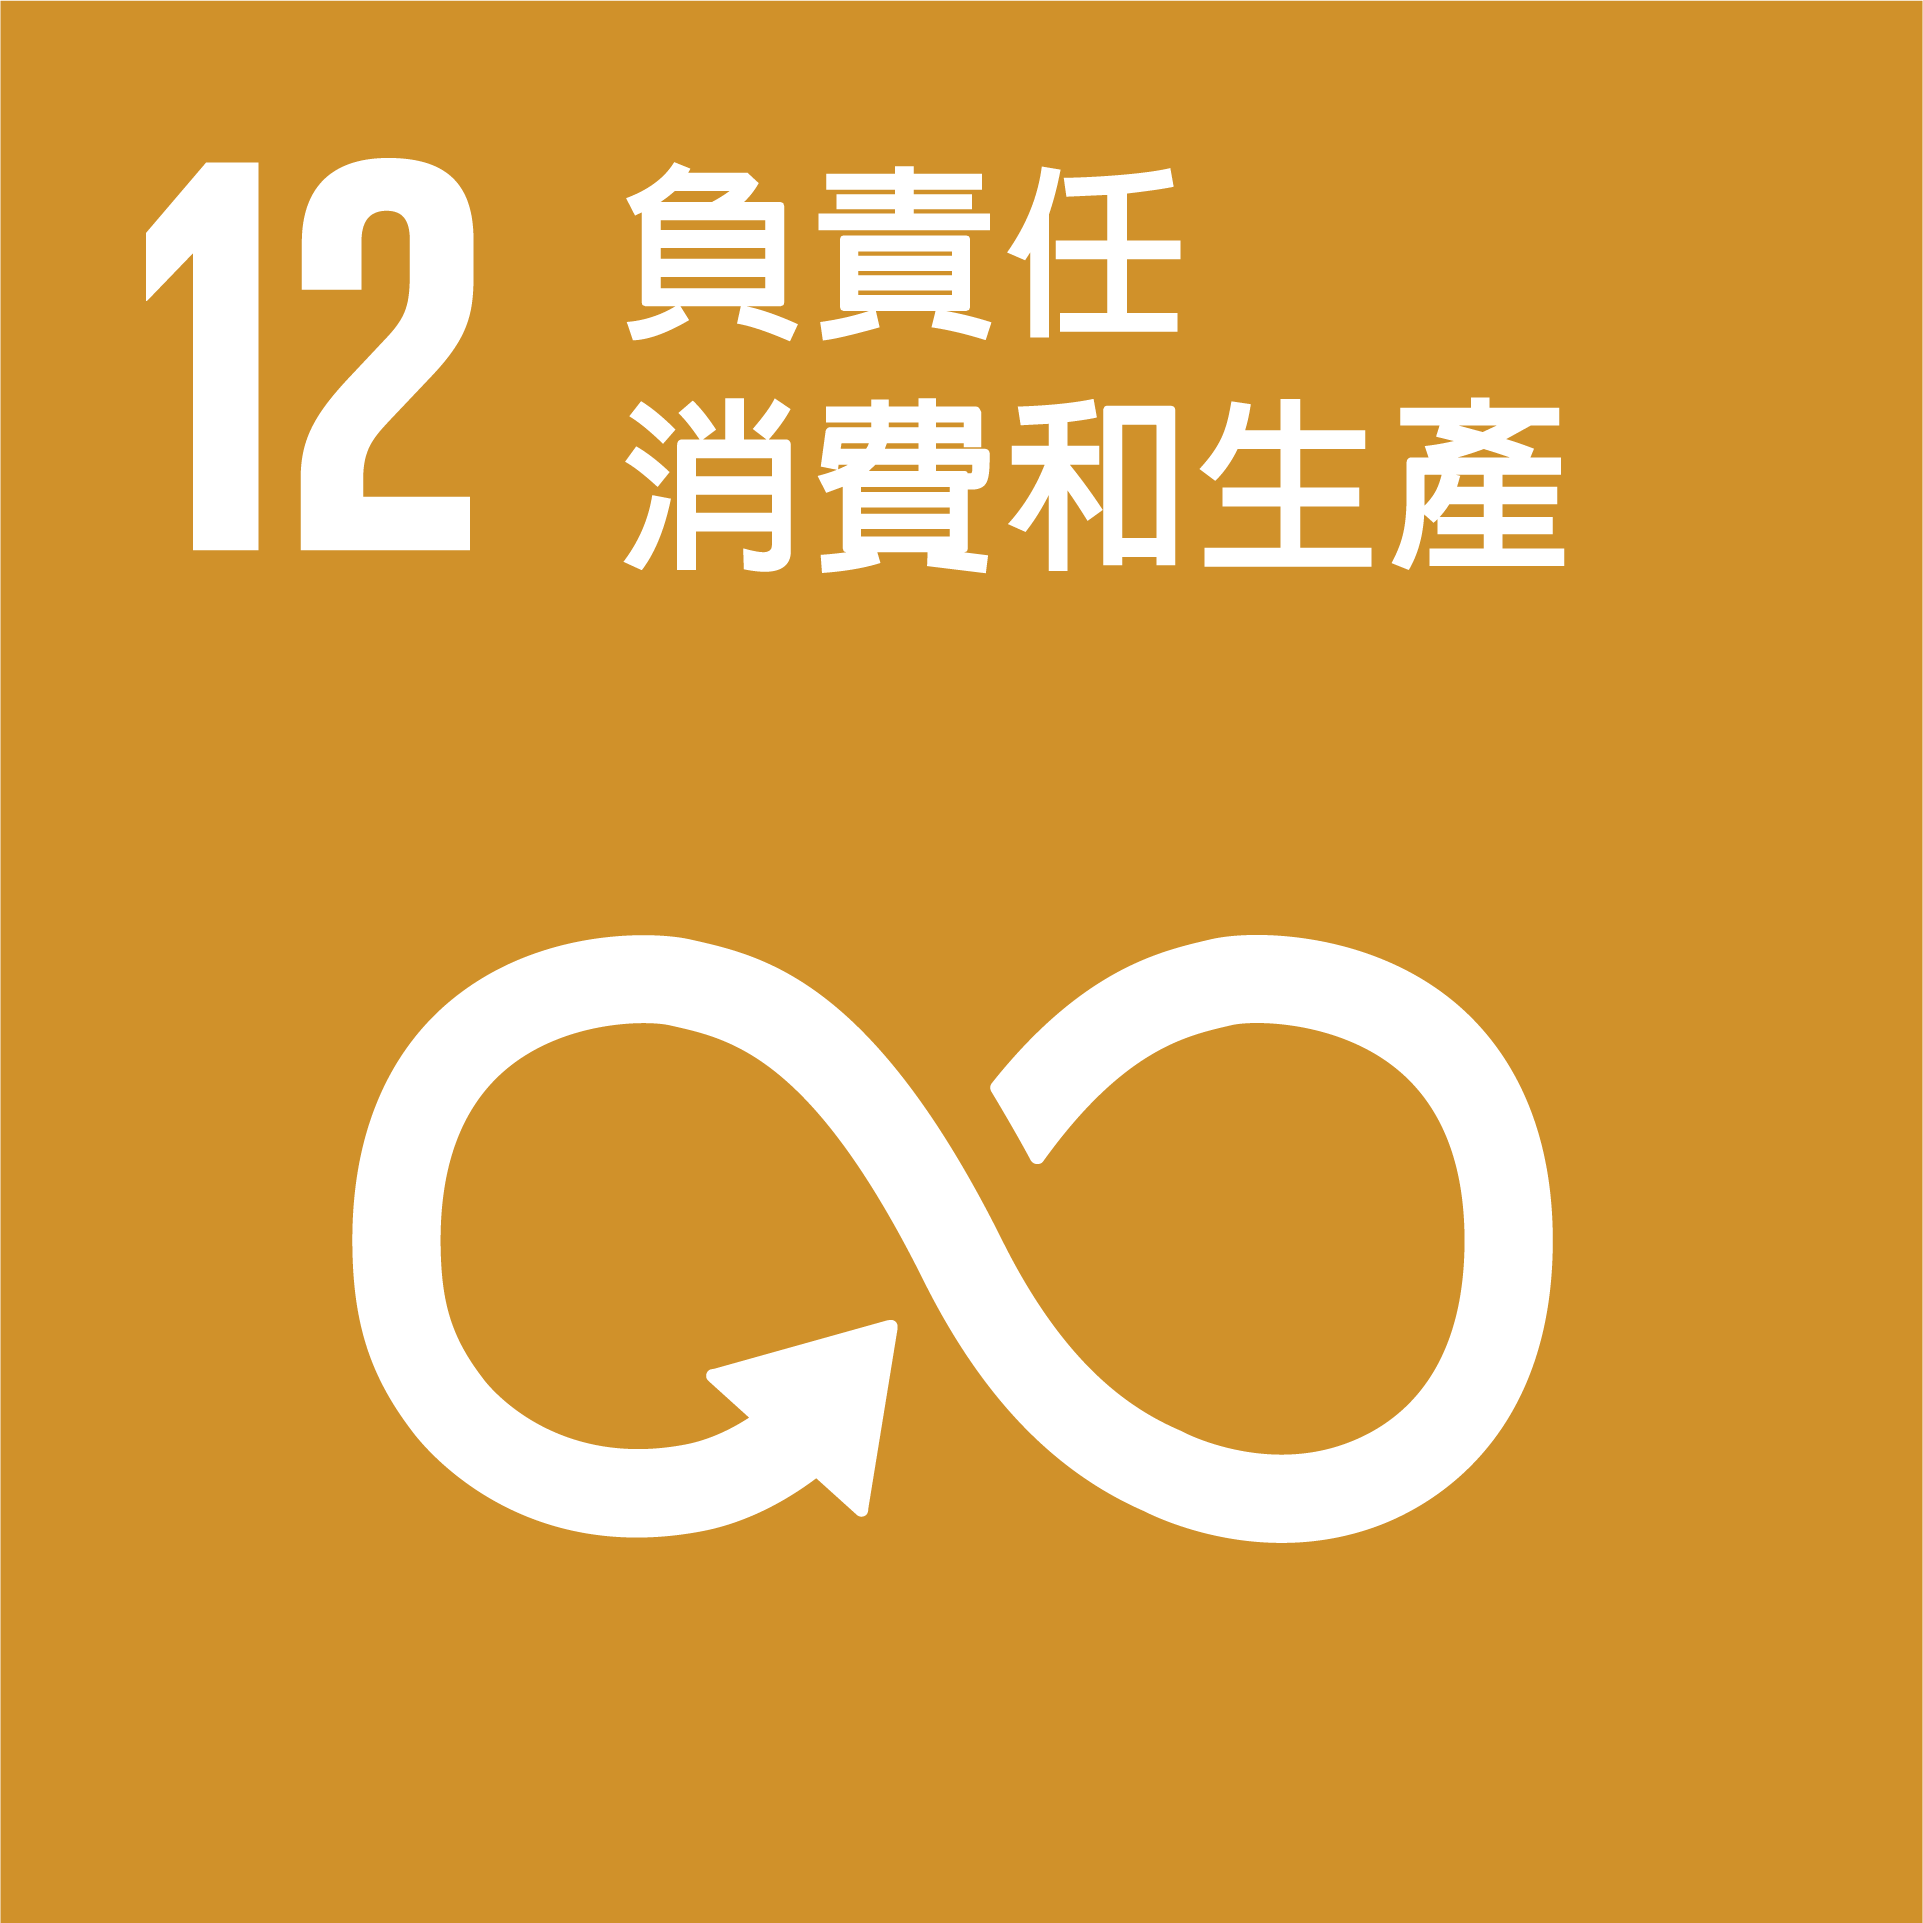 SDG vertical logo icons Chi 12